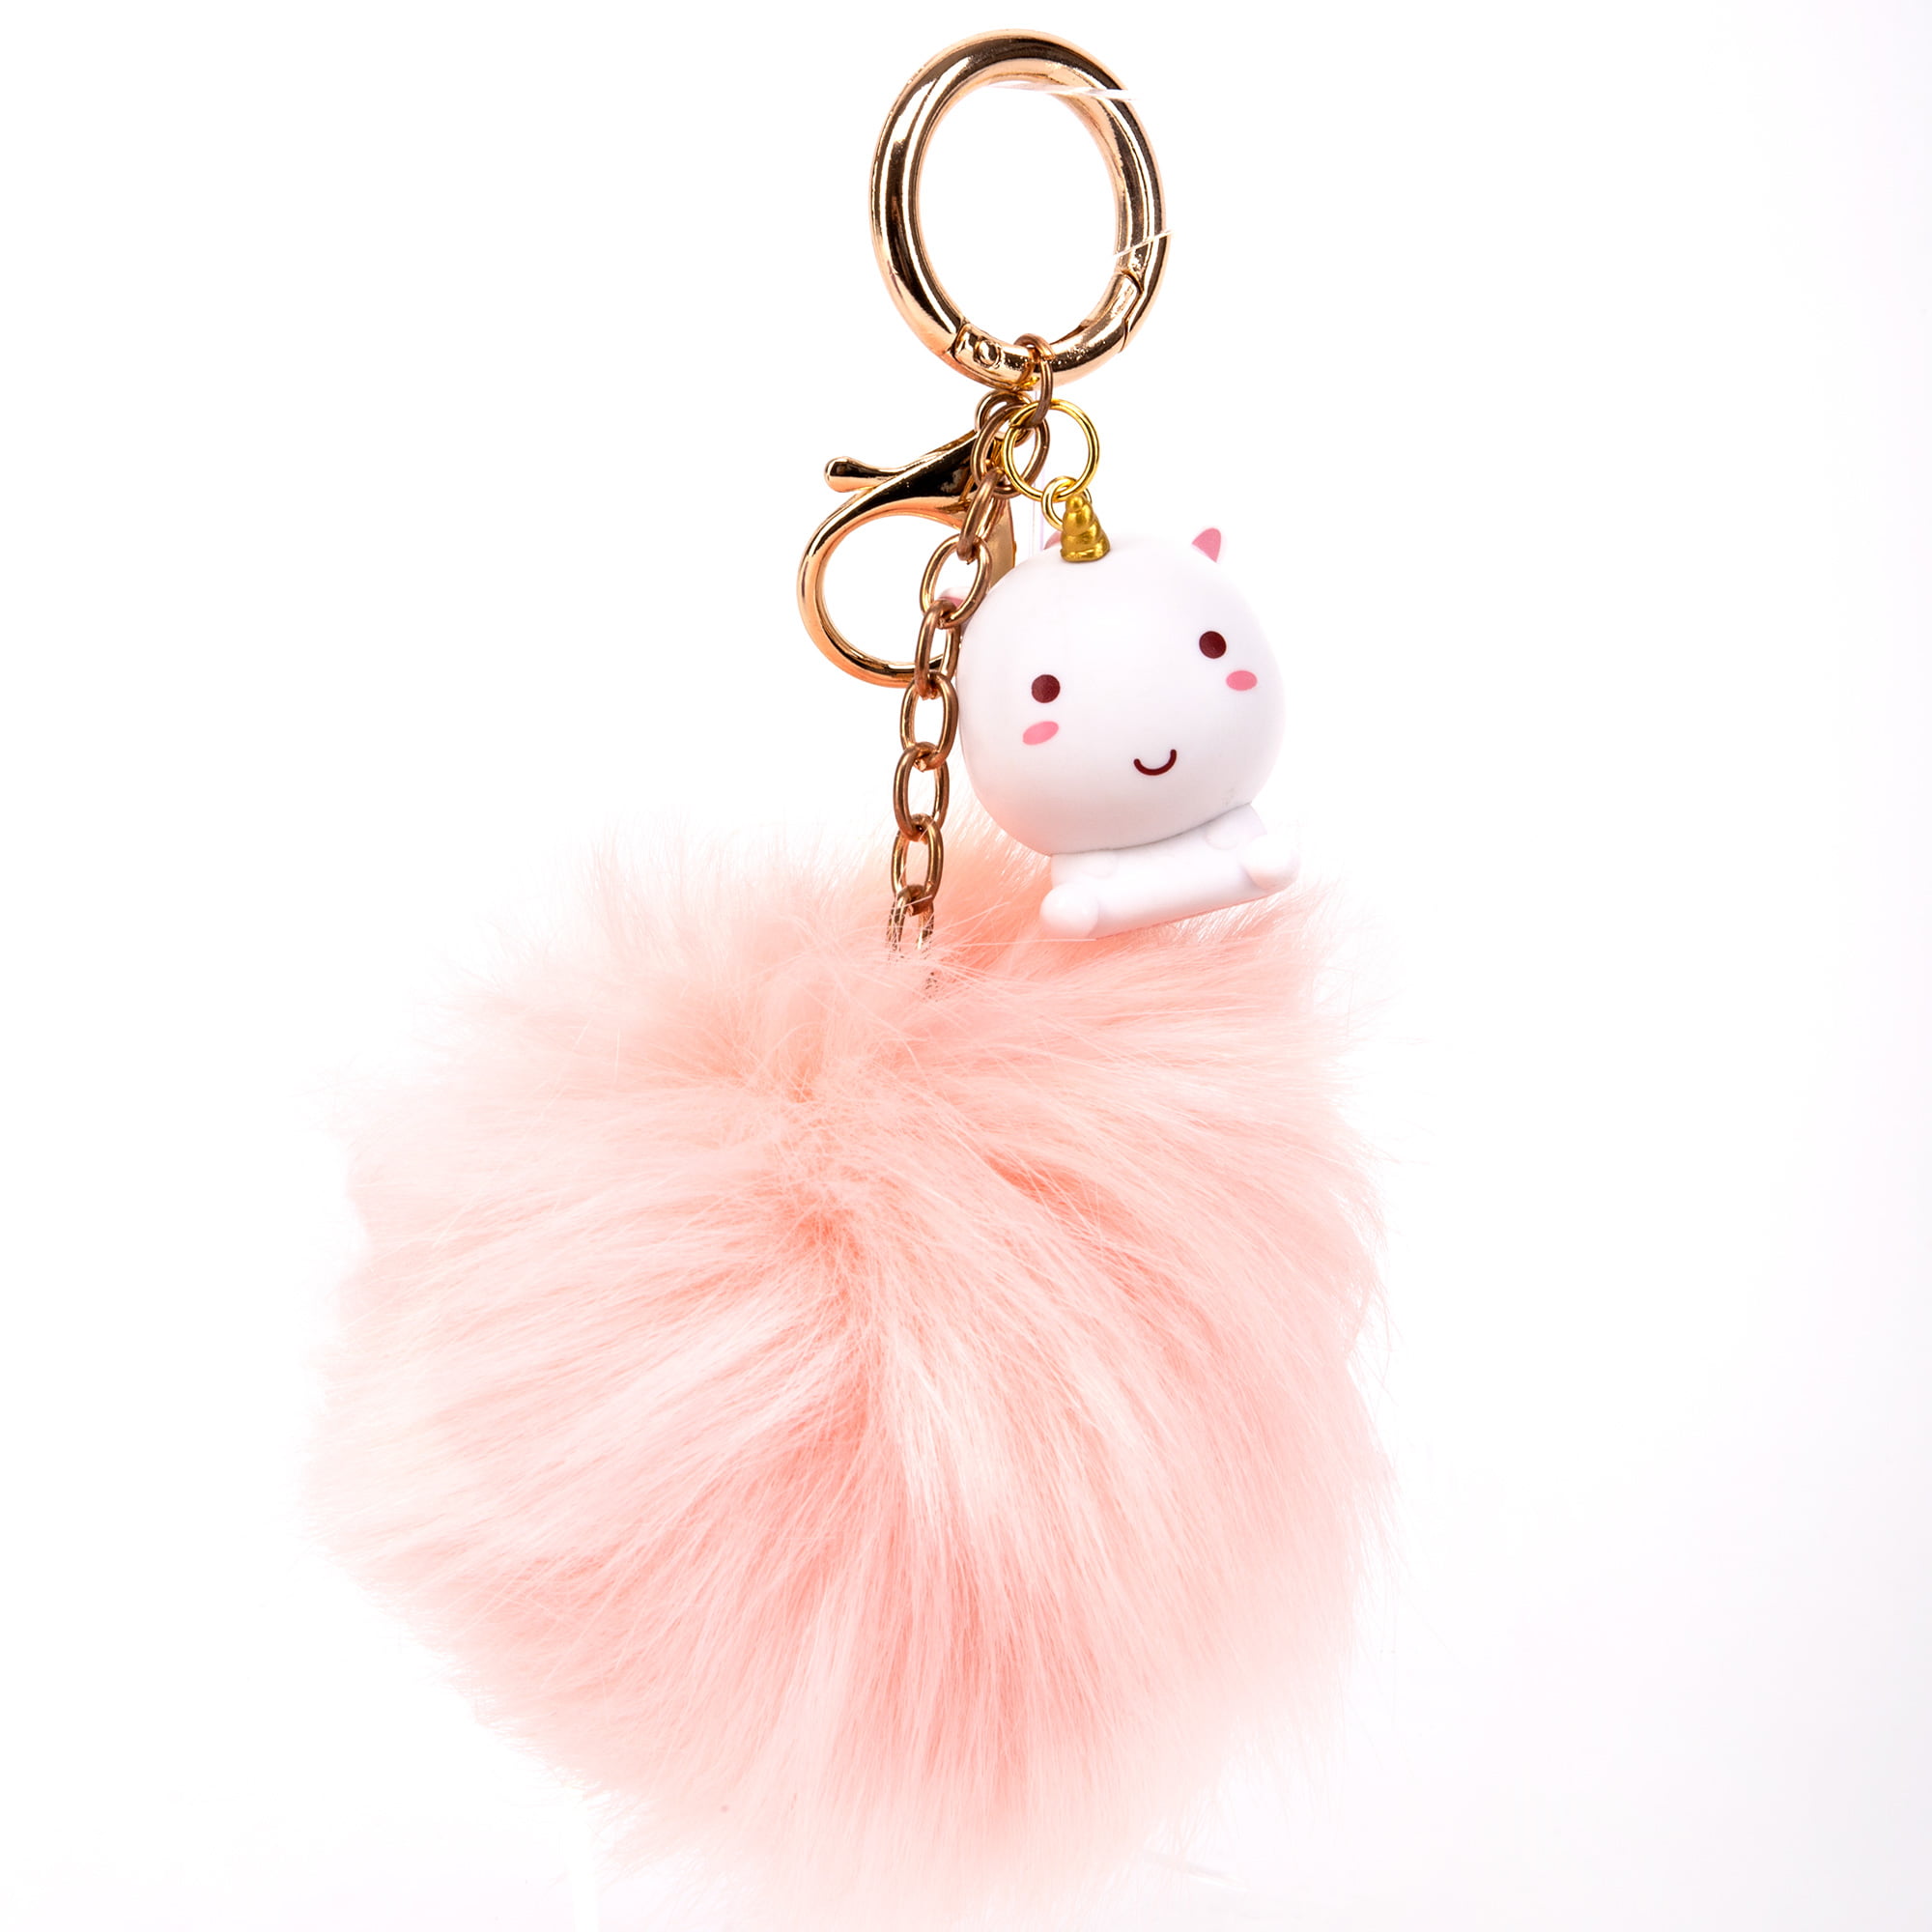 Haodou.Heart Plush Keychain Pom Pom Key Ring Gift Cute Fluffy Car Key Chain for Women Lady Girls Black